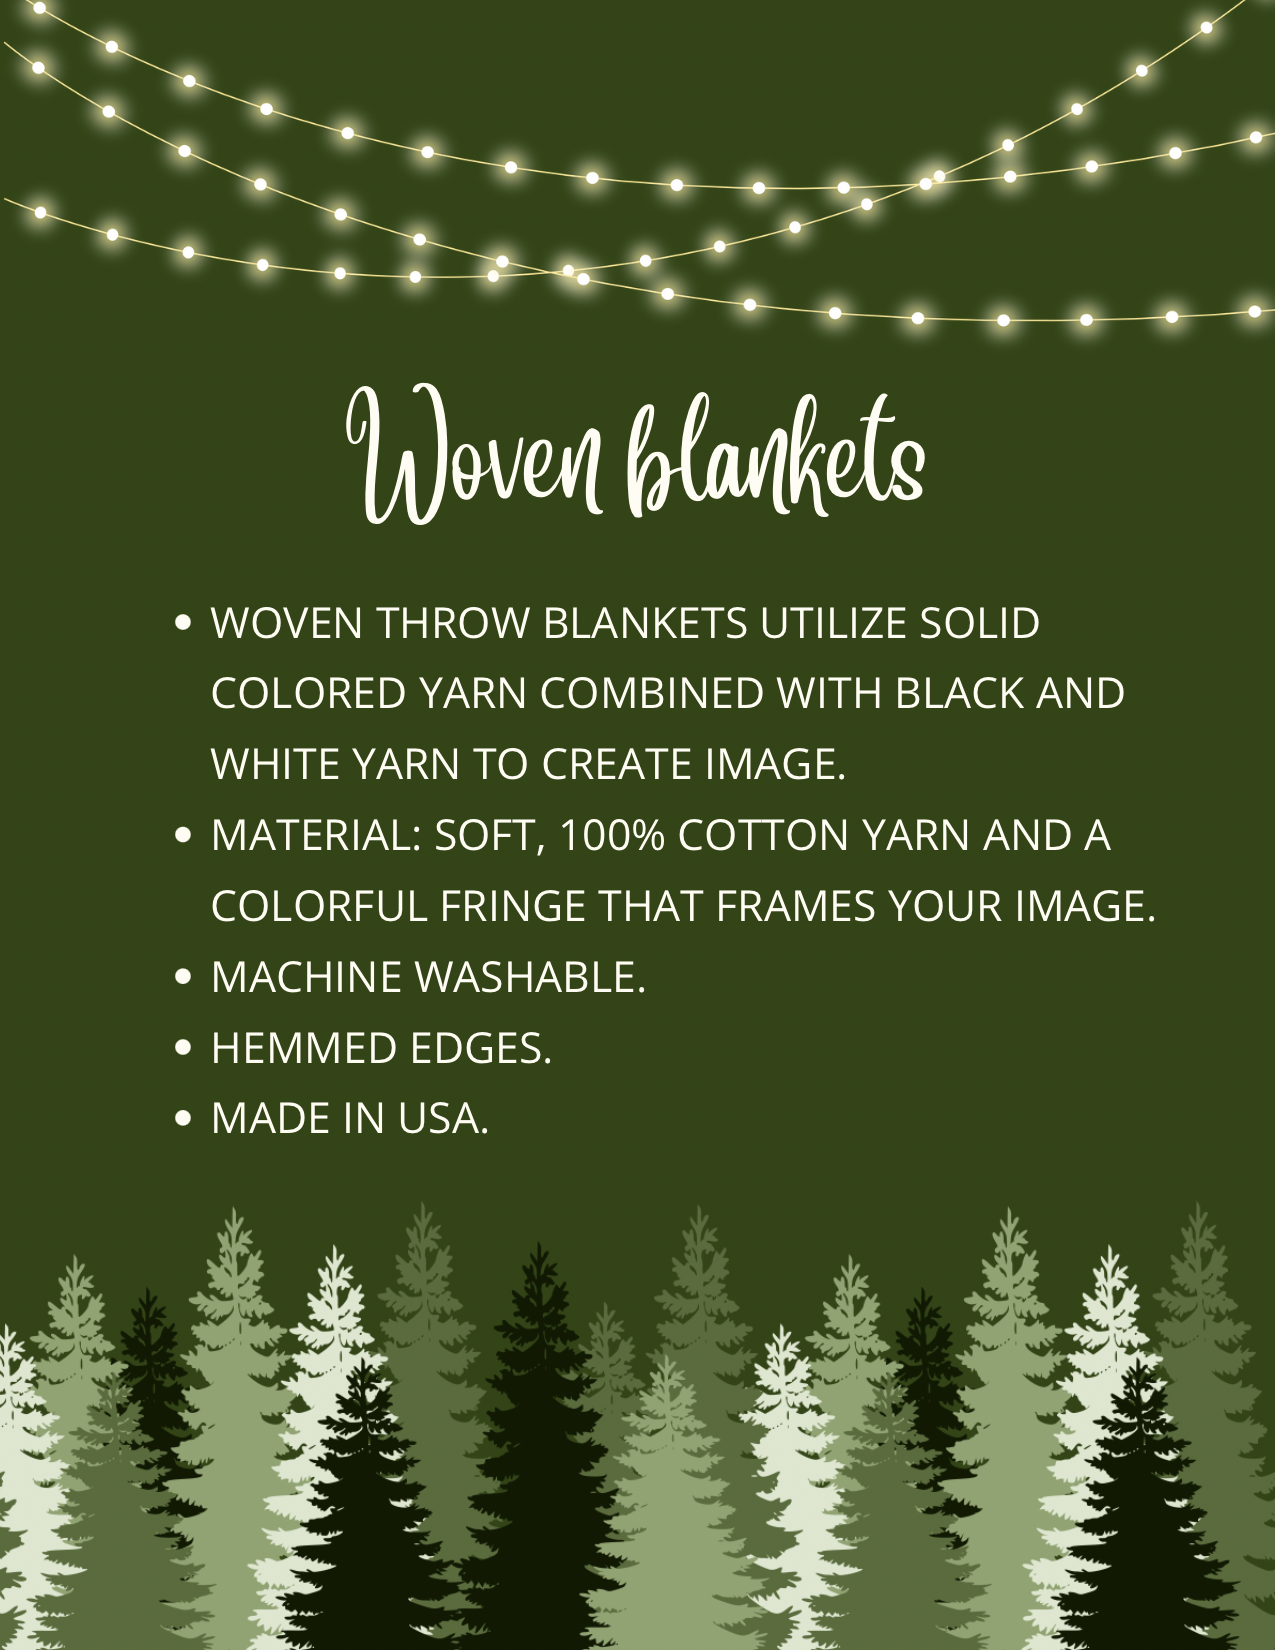 Snowflake Woven Blankets for holiday season. Black throw blanket with snowflakes